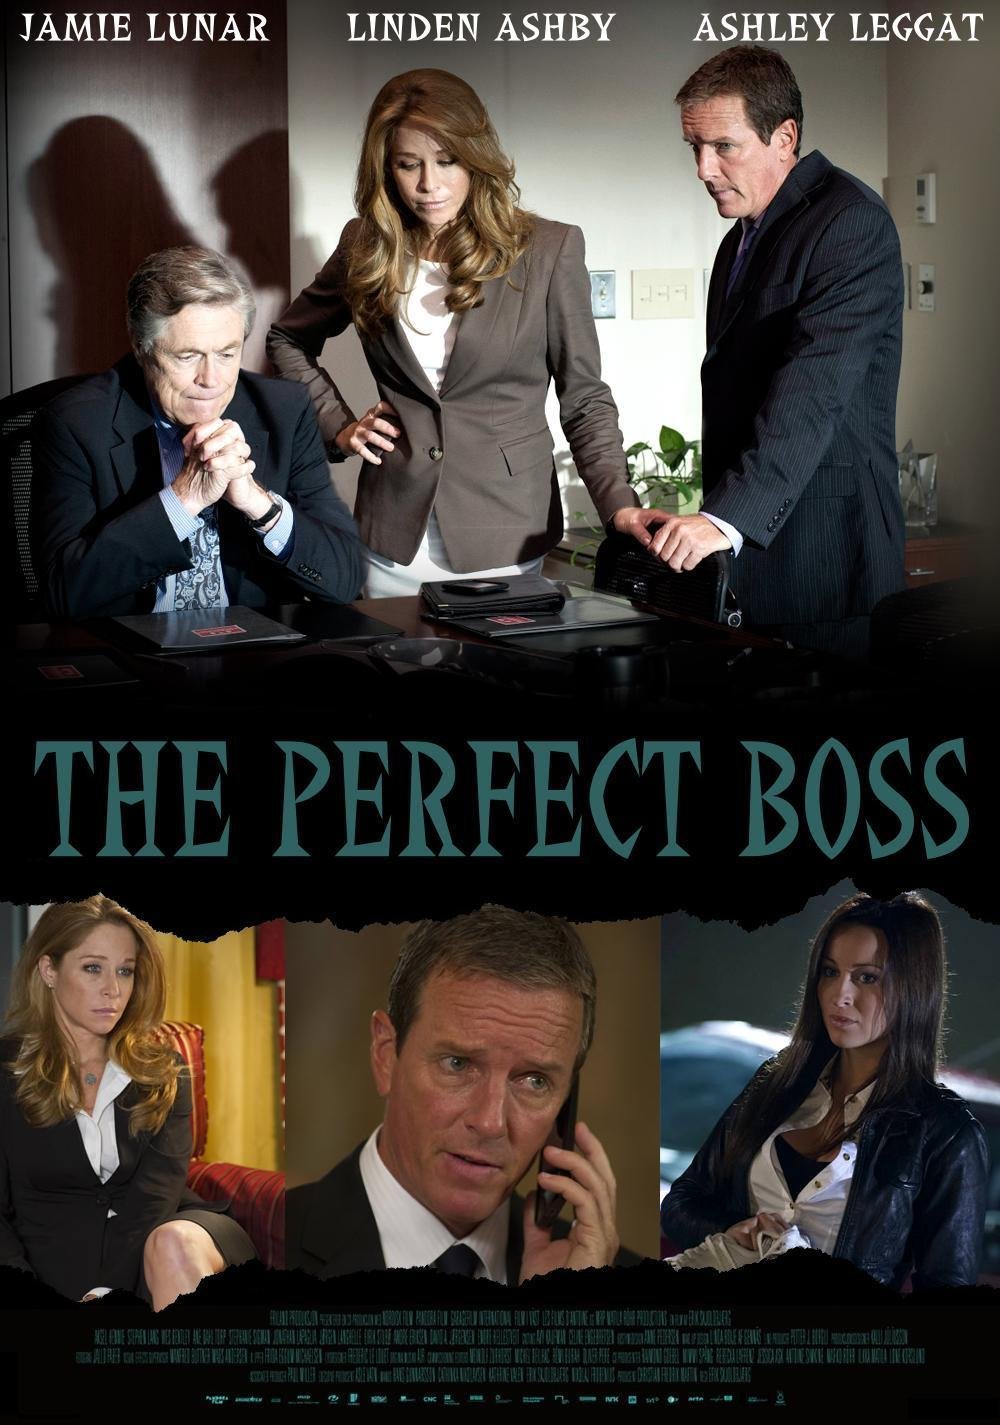 The Perfect Boss (2013) Screenshot 1